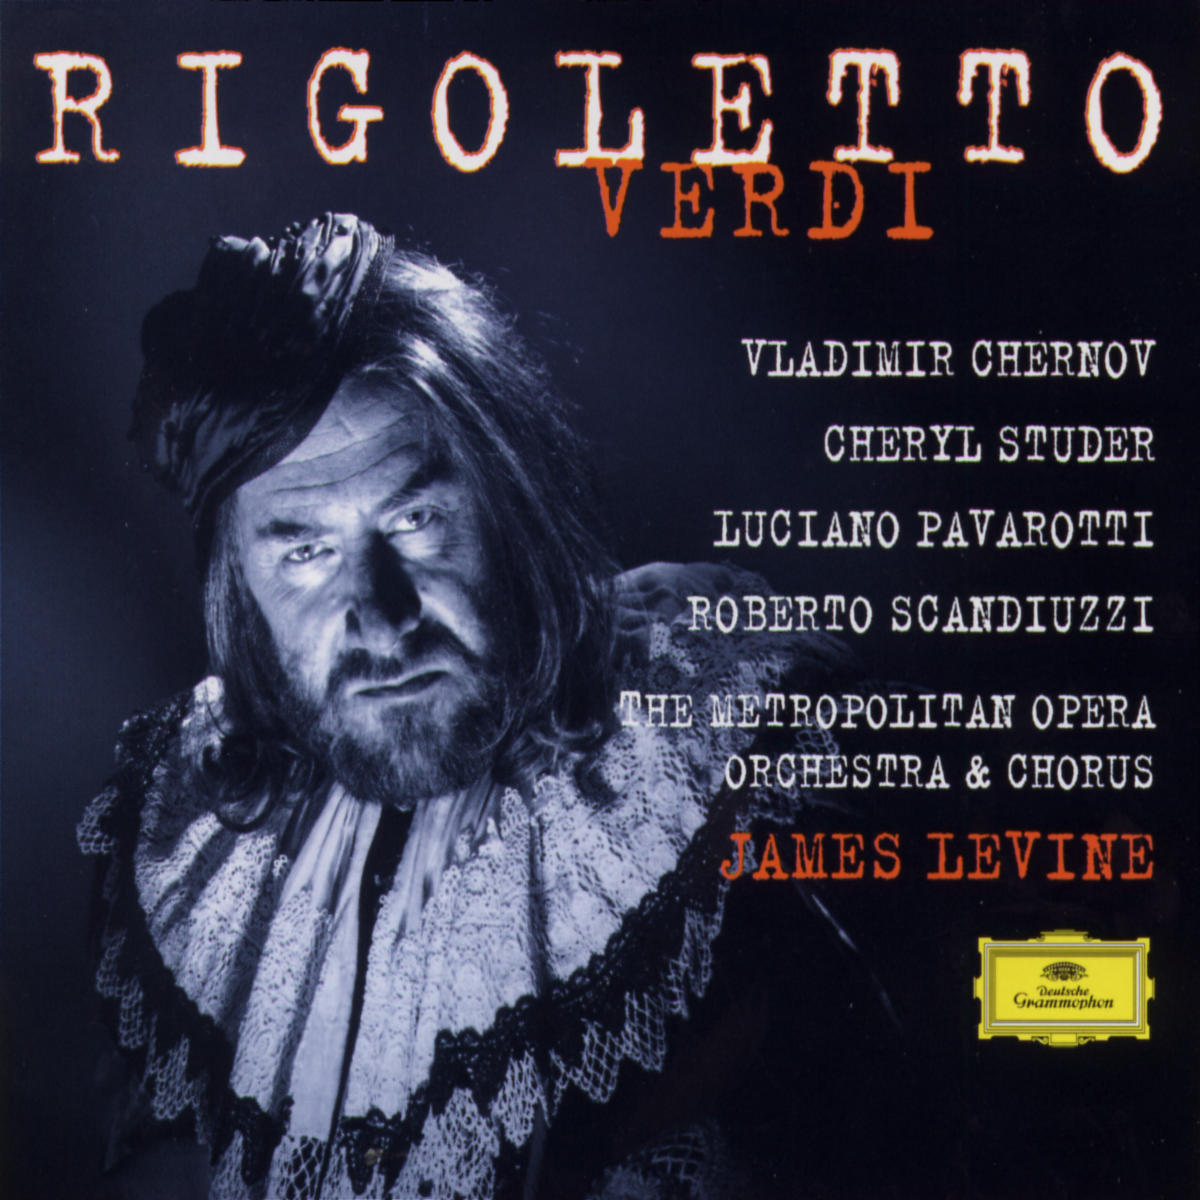 Rigoletto Verdi 